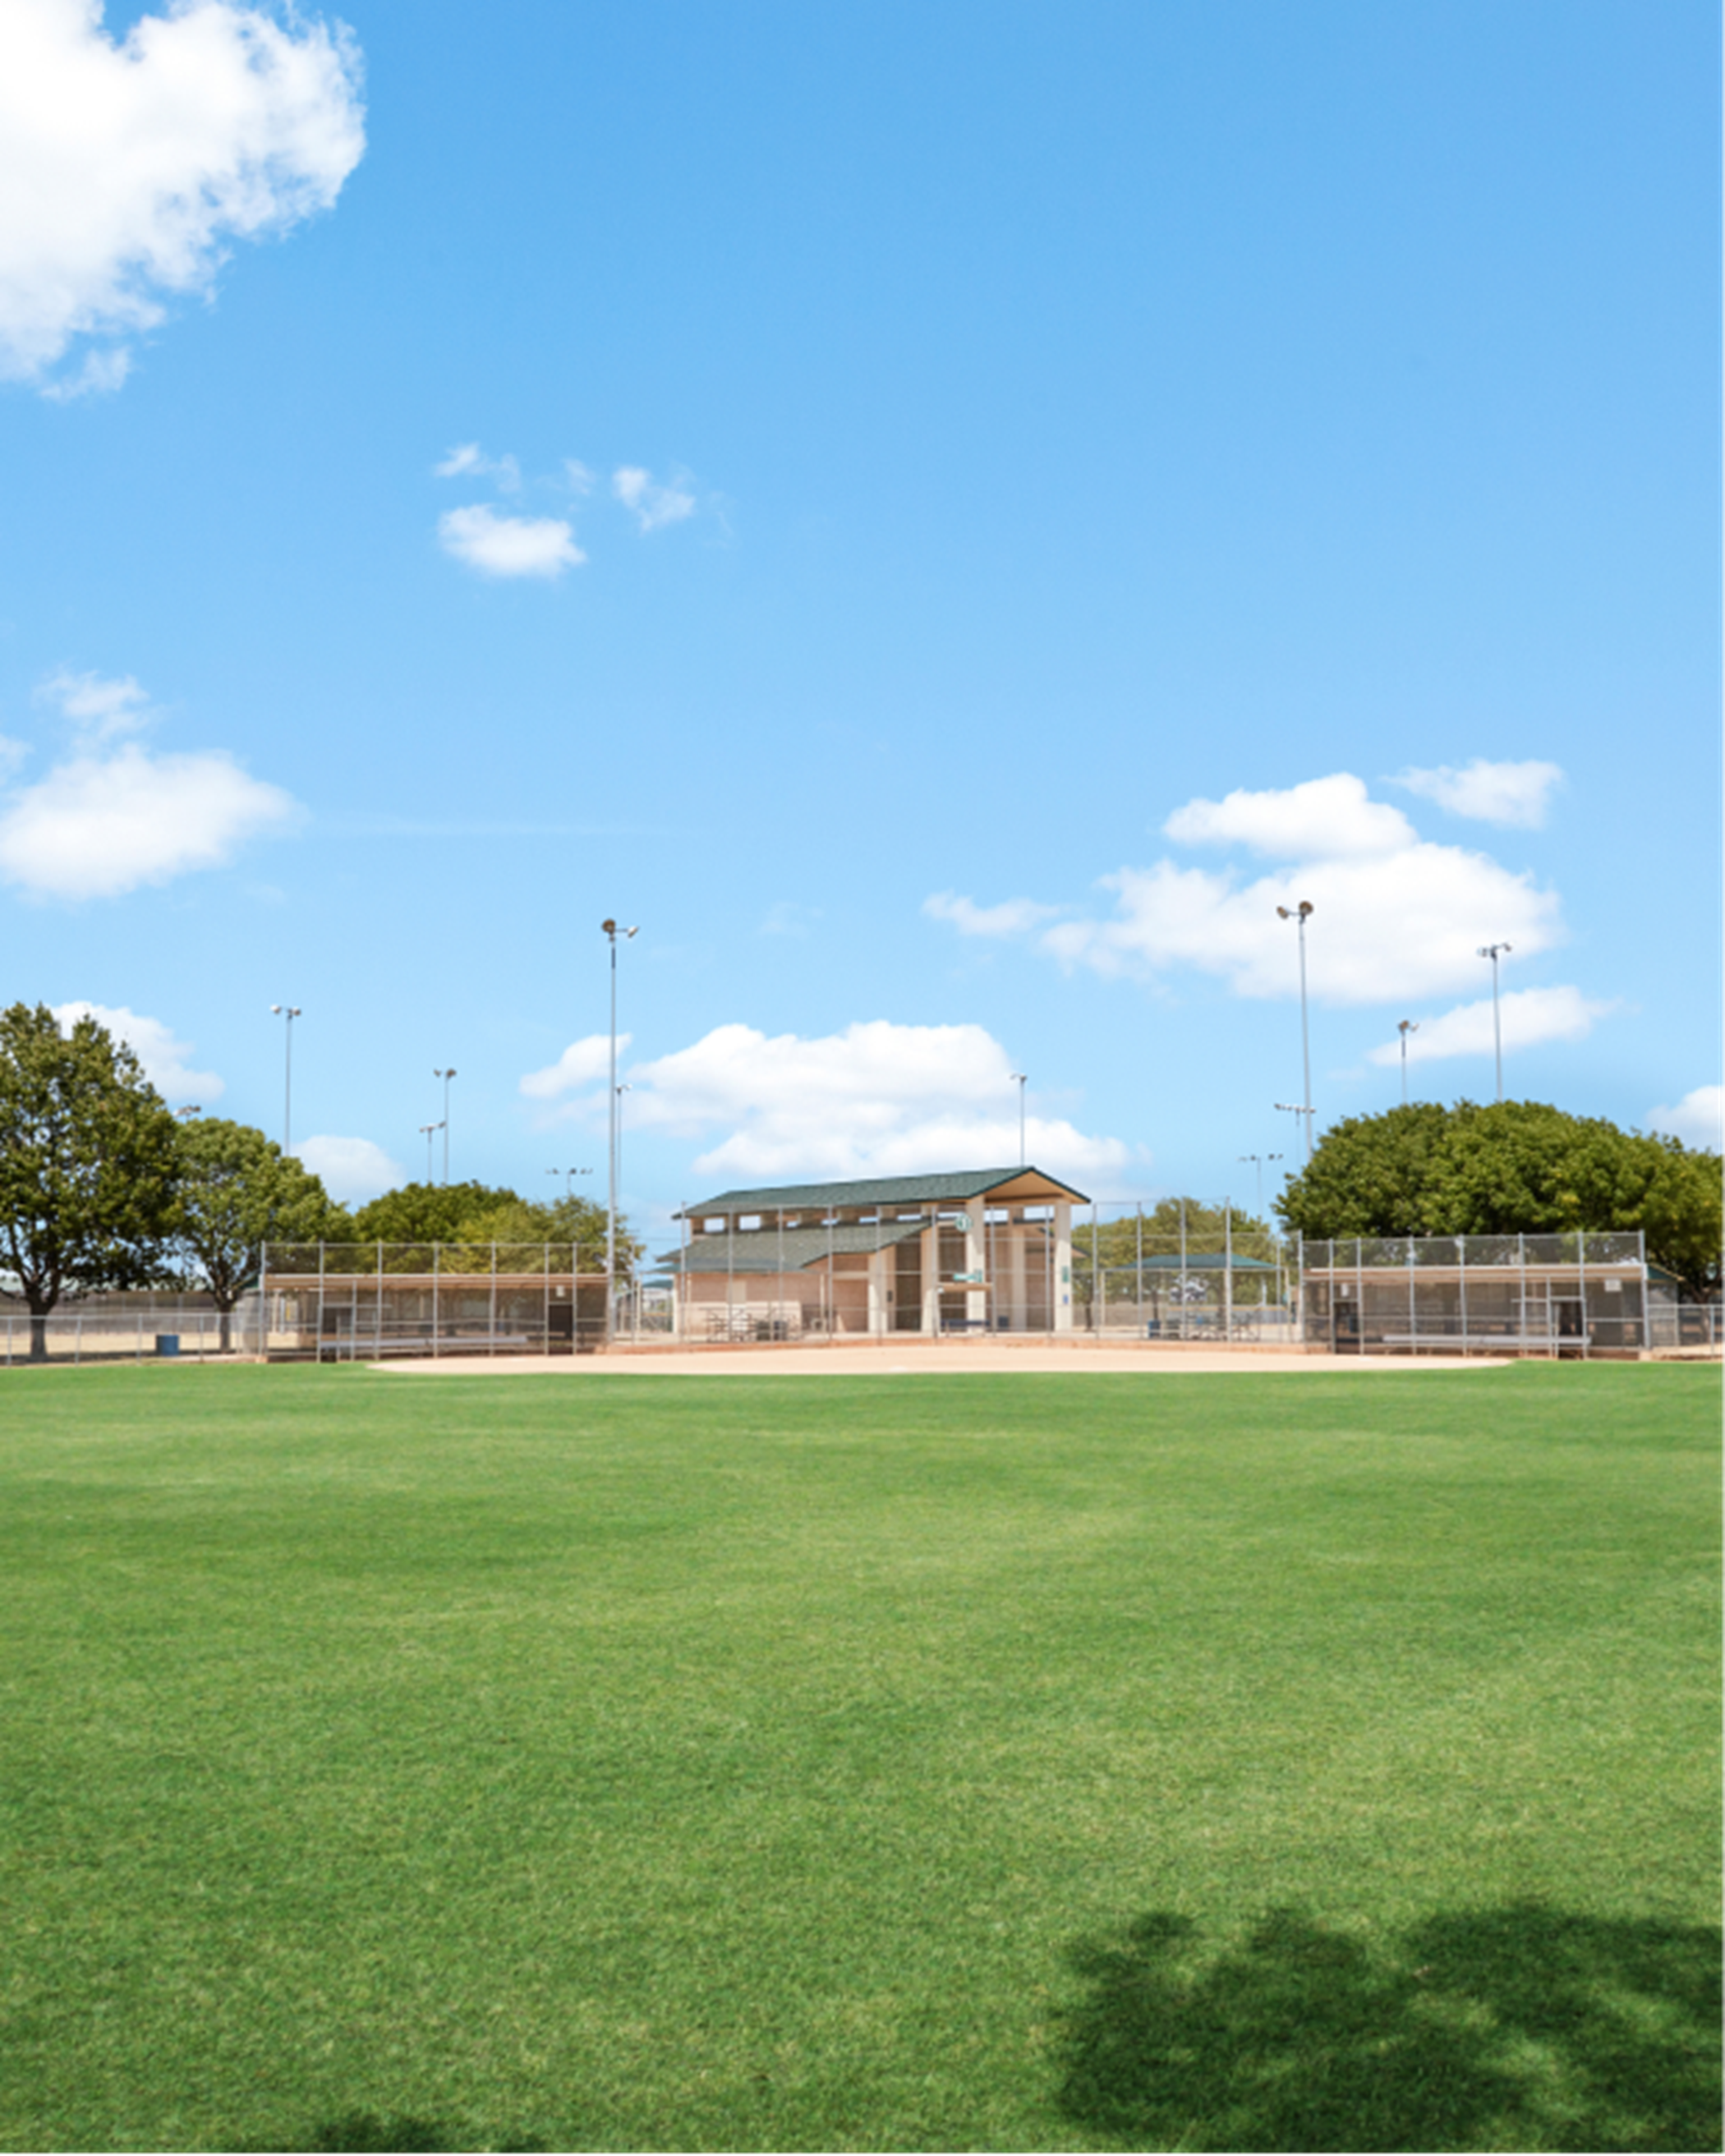 Local Baseball Field